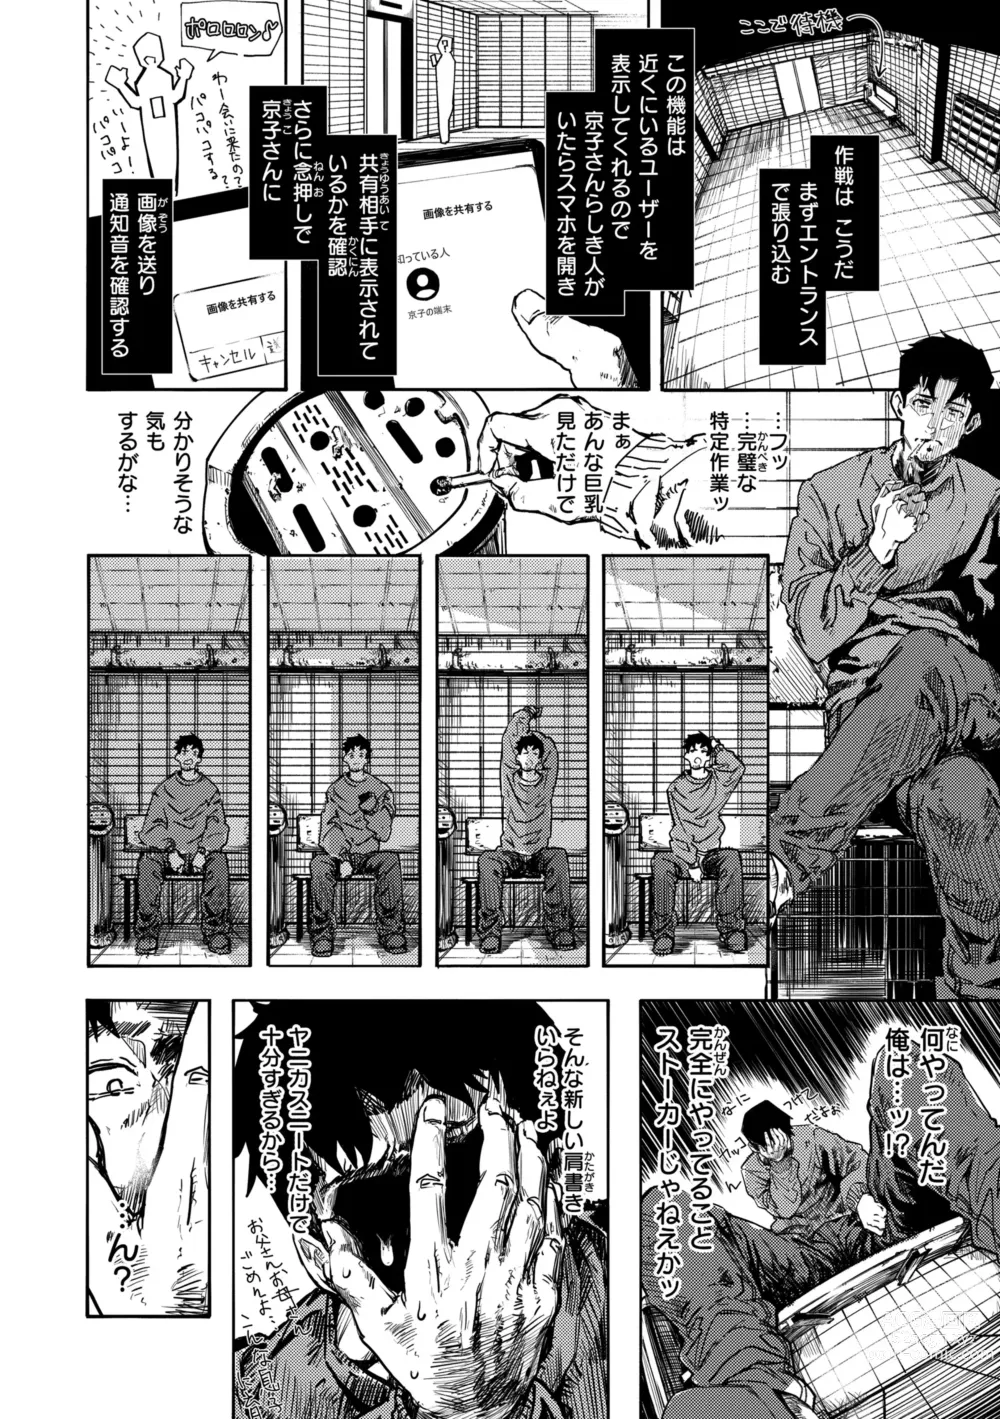 Page 10 of manga OHO-goe no Hibiku Machi - OHO voice echoes in the town♥